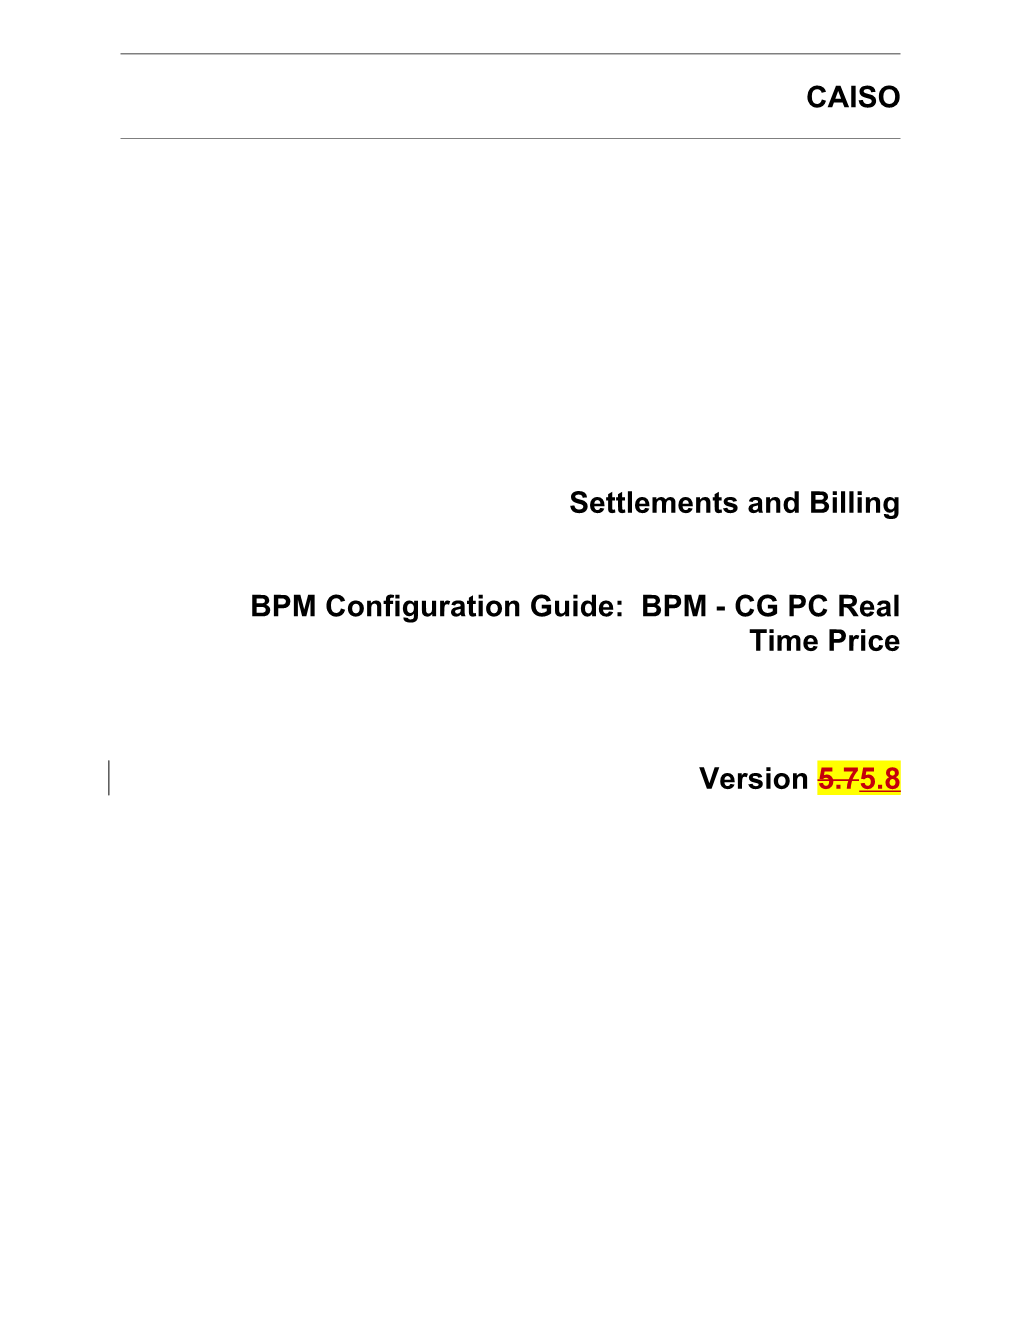 BPM - CG PC Real Time Price